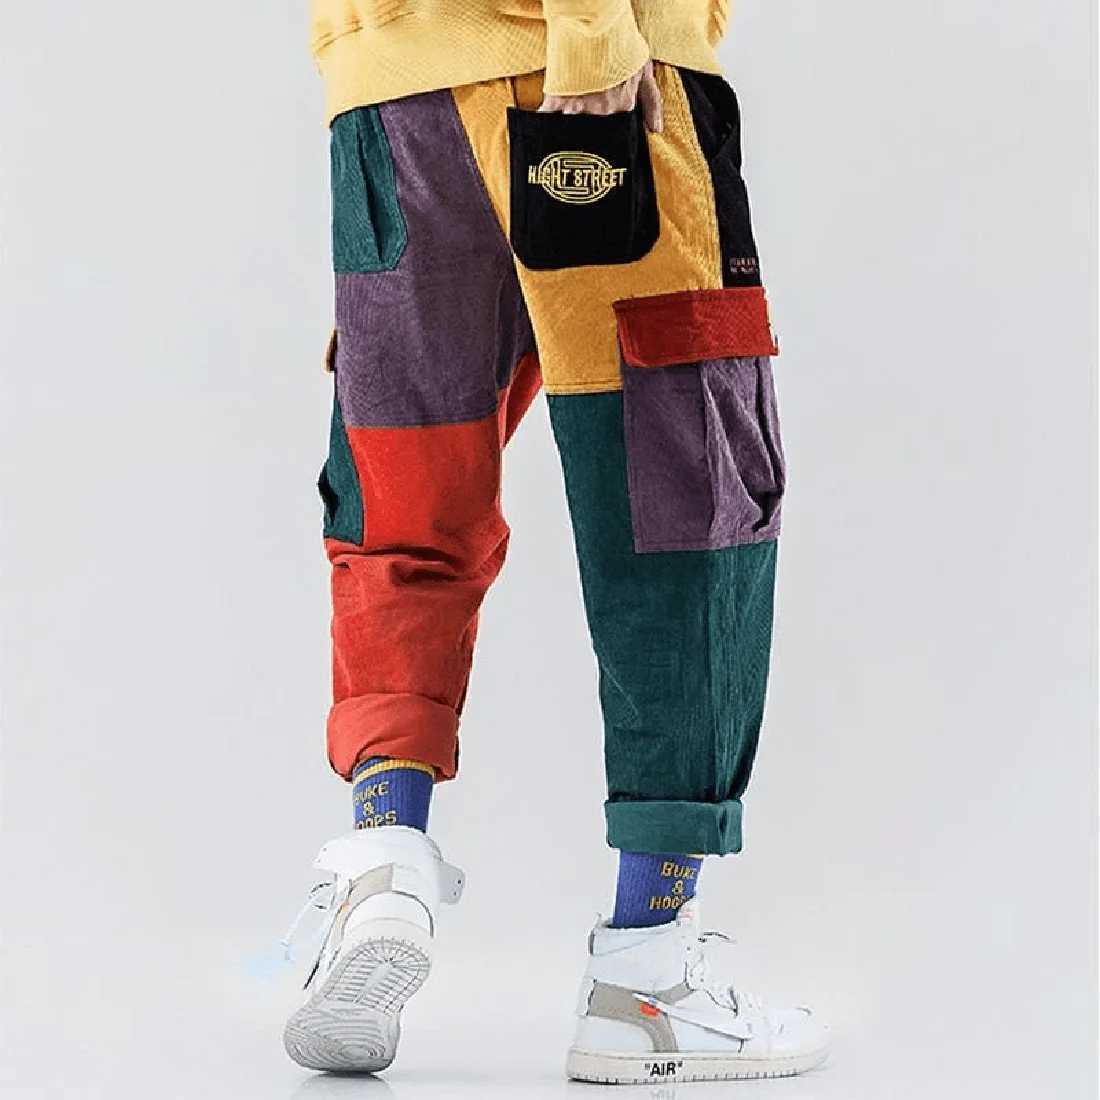 Herenbroek atsunset kleurrijke patchwork lading broek pocket casual straatkleding harajuku sportpantsl2405